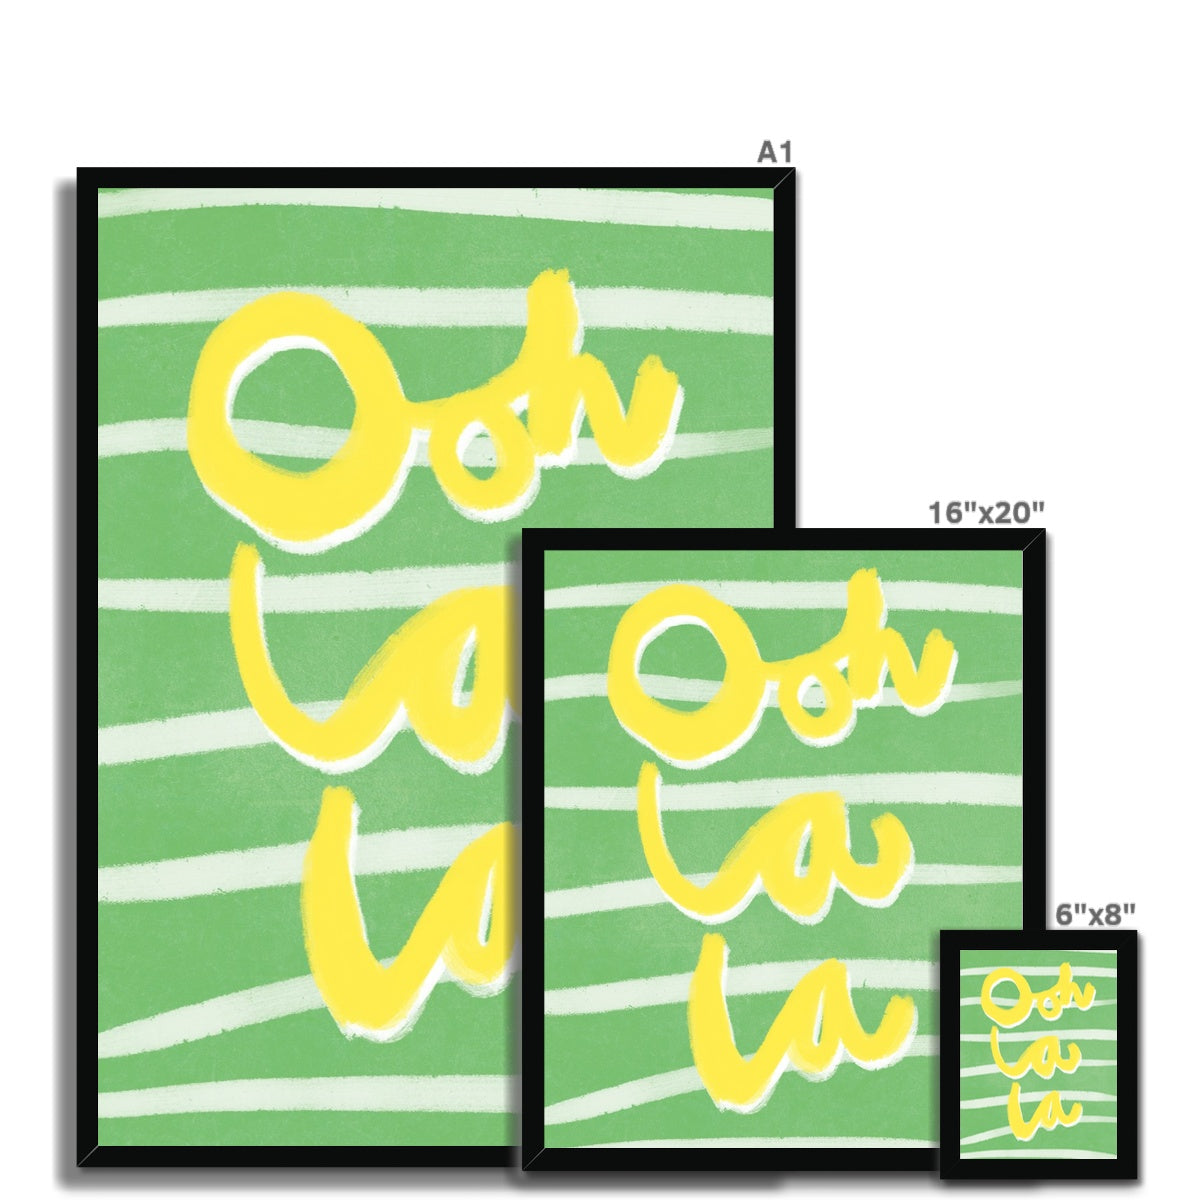 Ooh La La Art Print - Green, Yellow and White Framed Print